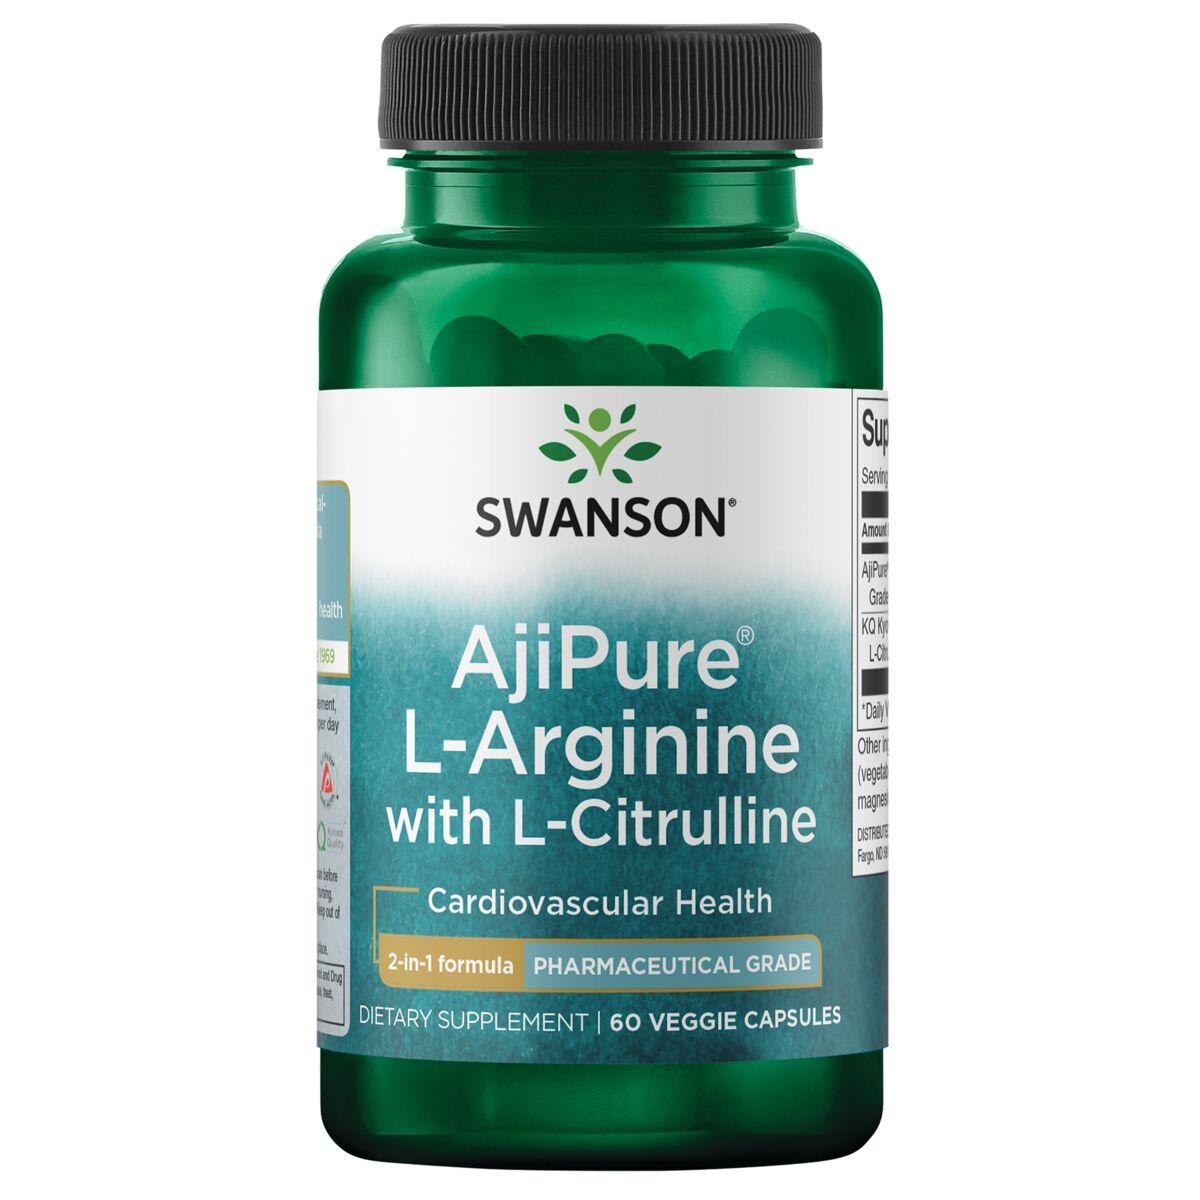 Swanson Ultra Ajipure L-Arginine with L-Citrulline - Pharmaceutical Grade Supplement Vitamin | 60 Veg Caps